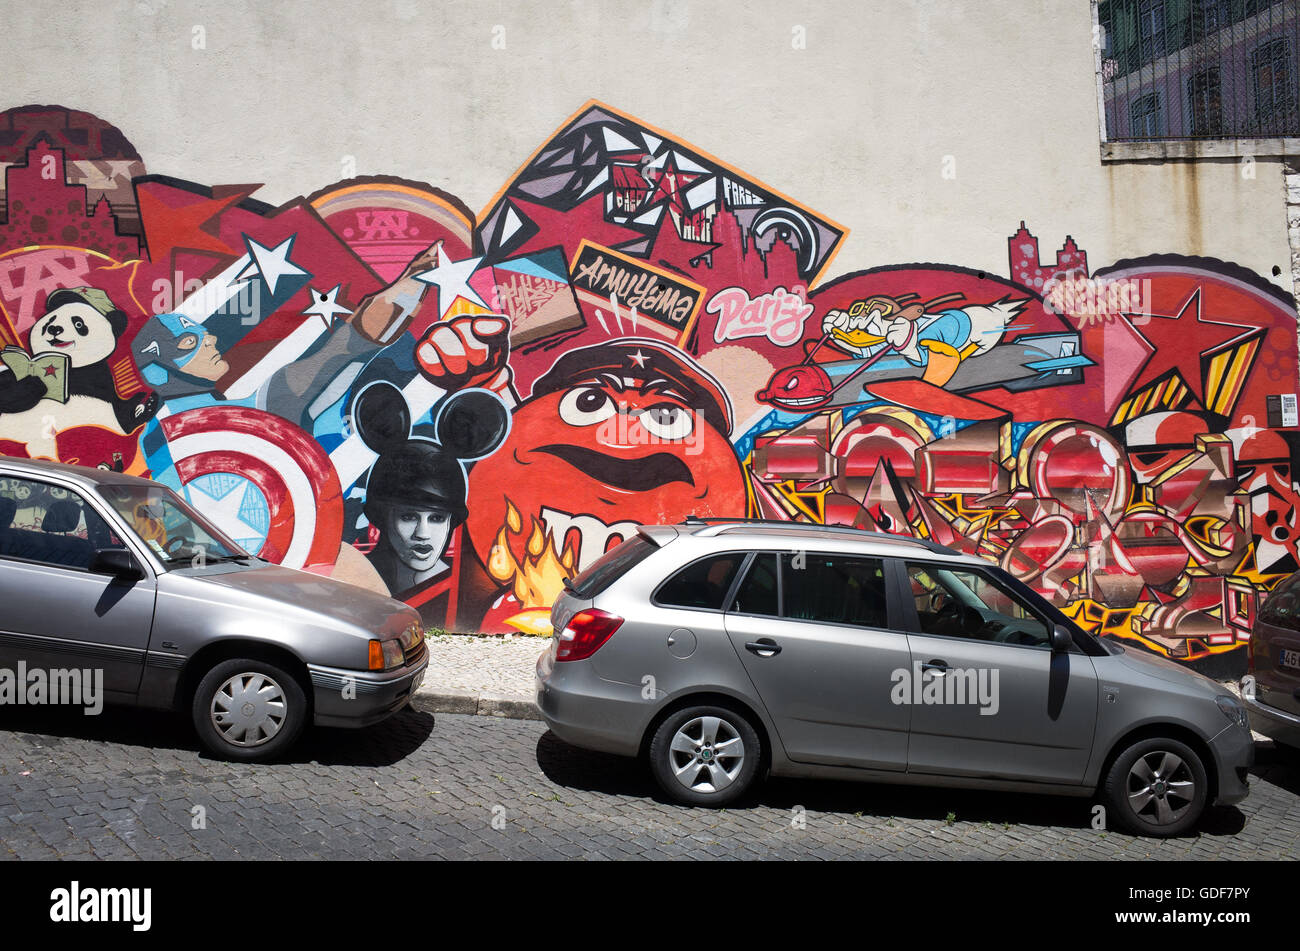 LISBON, Portugal - Samples of graffiti and street art on the streets of Lisbon, Portugal. Stock Photo